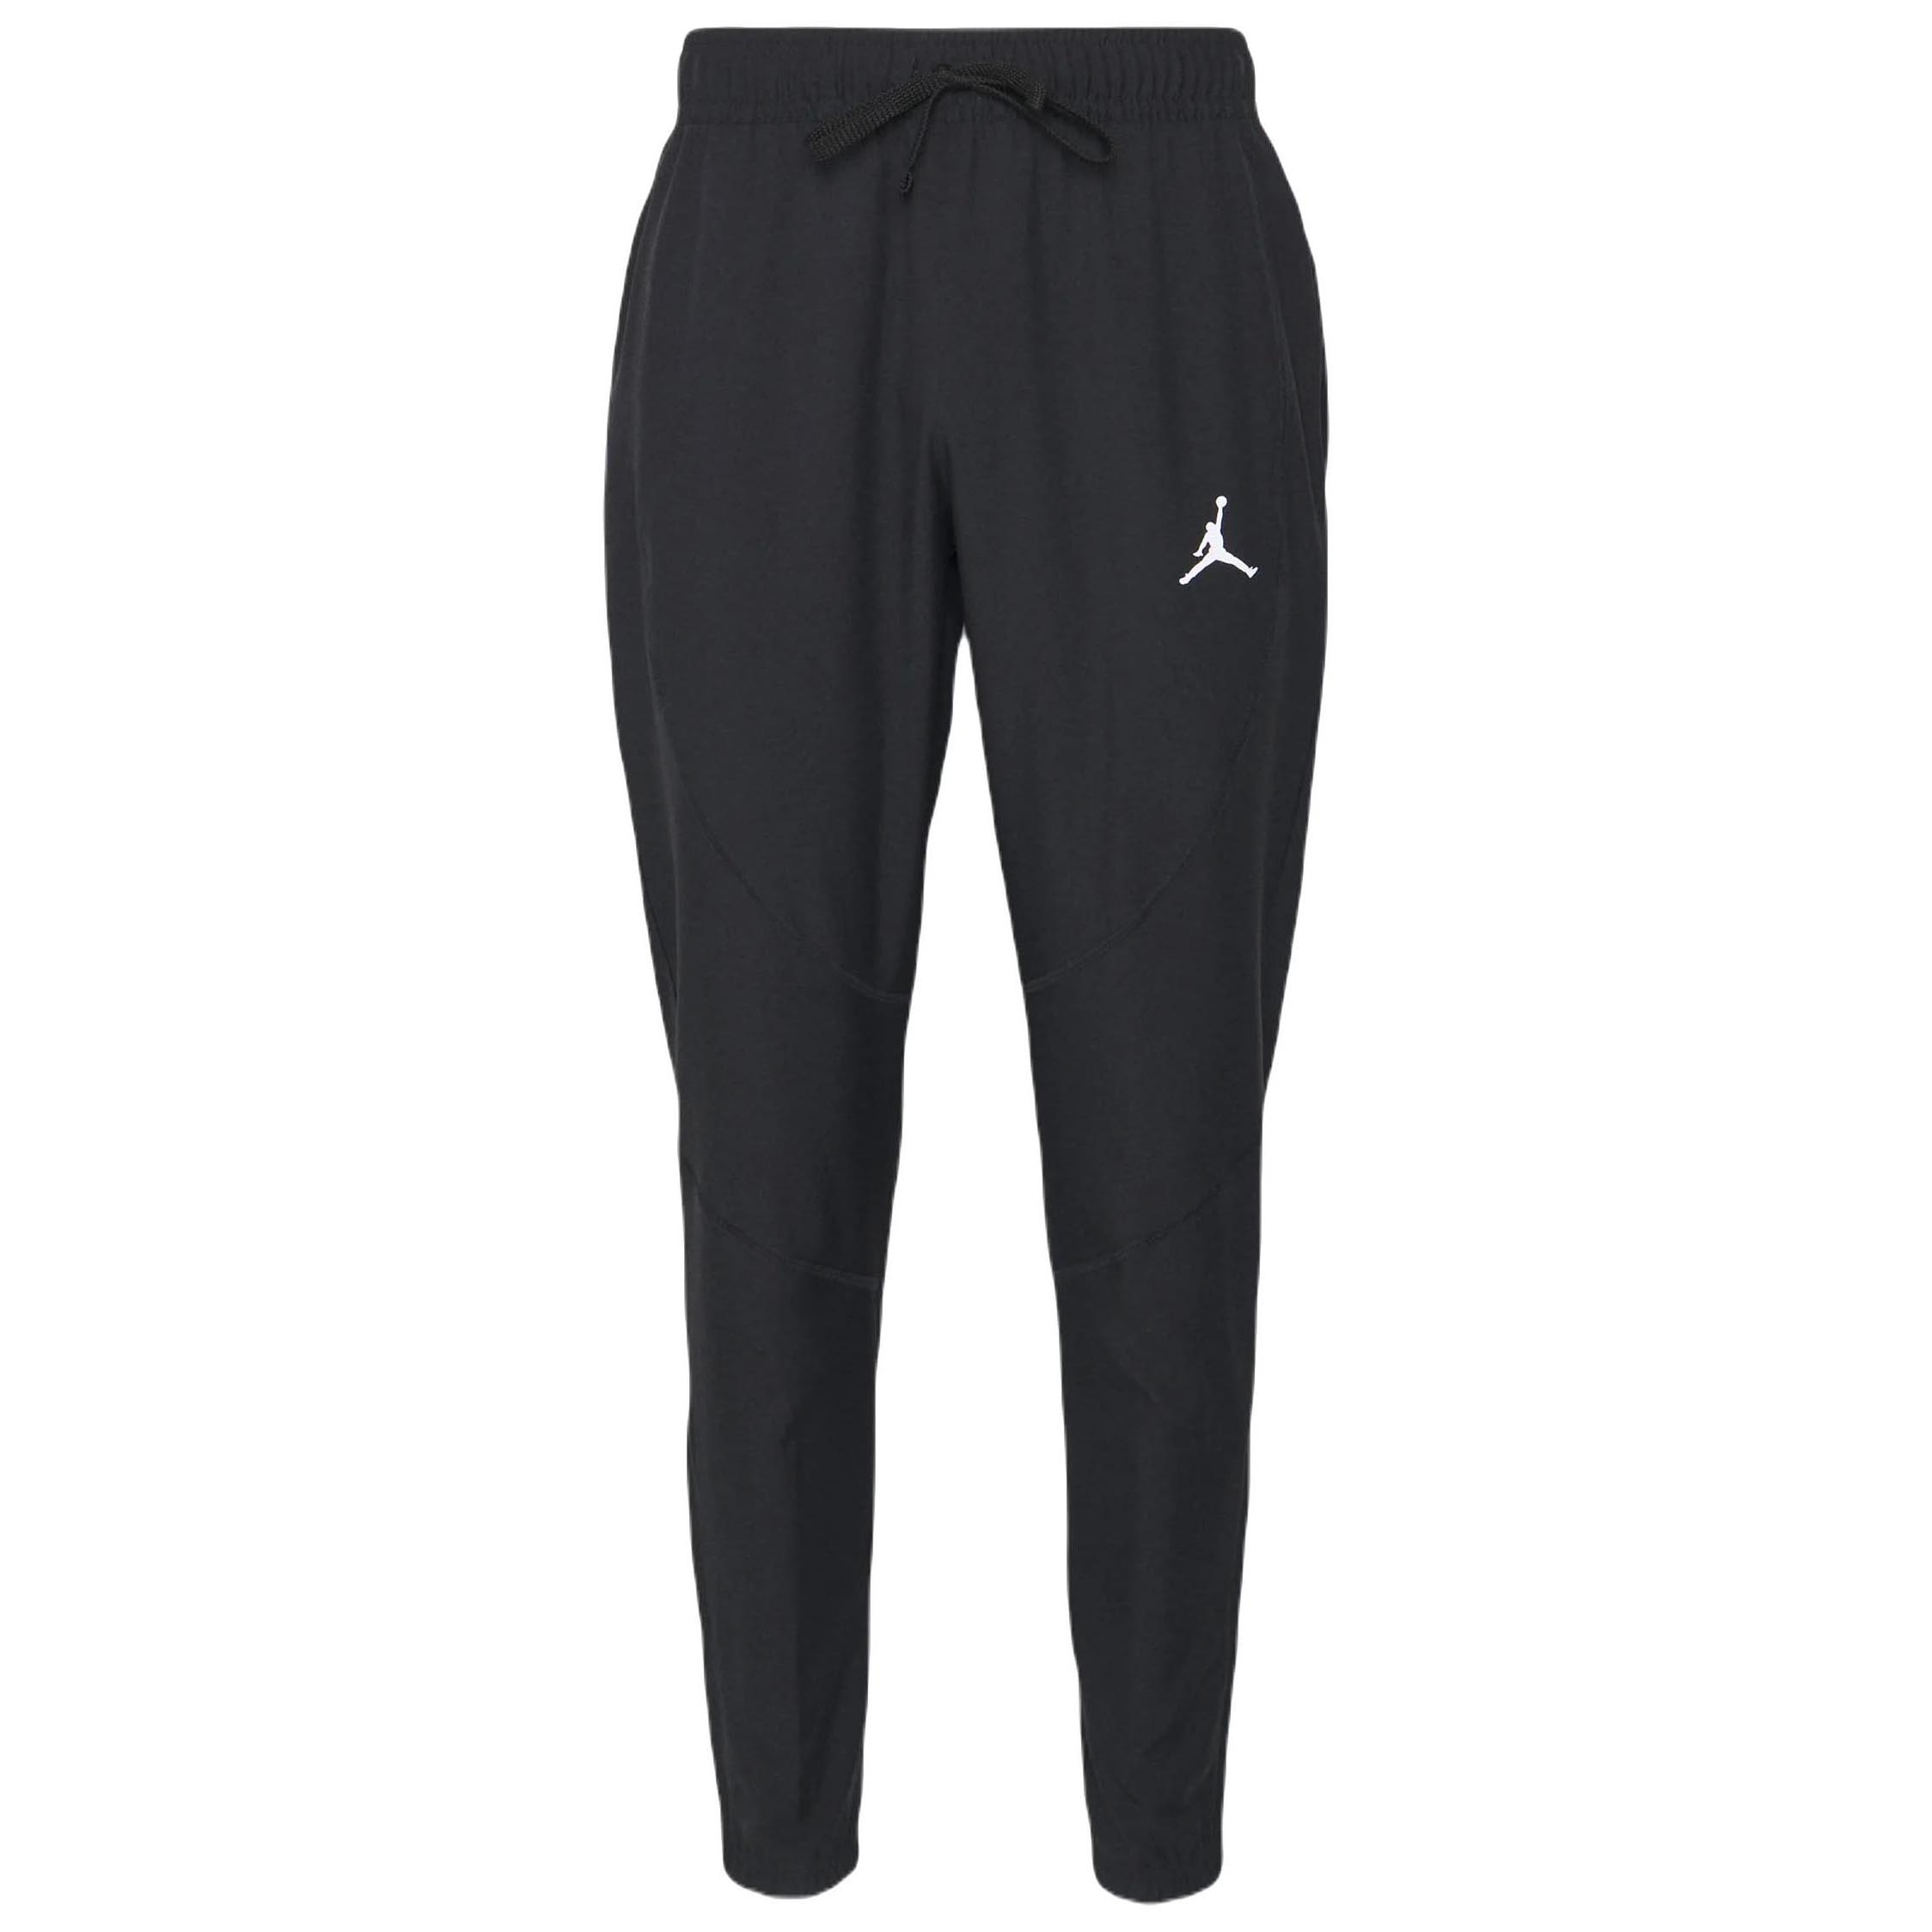 Спортивные брюки Nike Air Jordan Woven, черный спортивные брюки nike air jordan flight pant серый